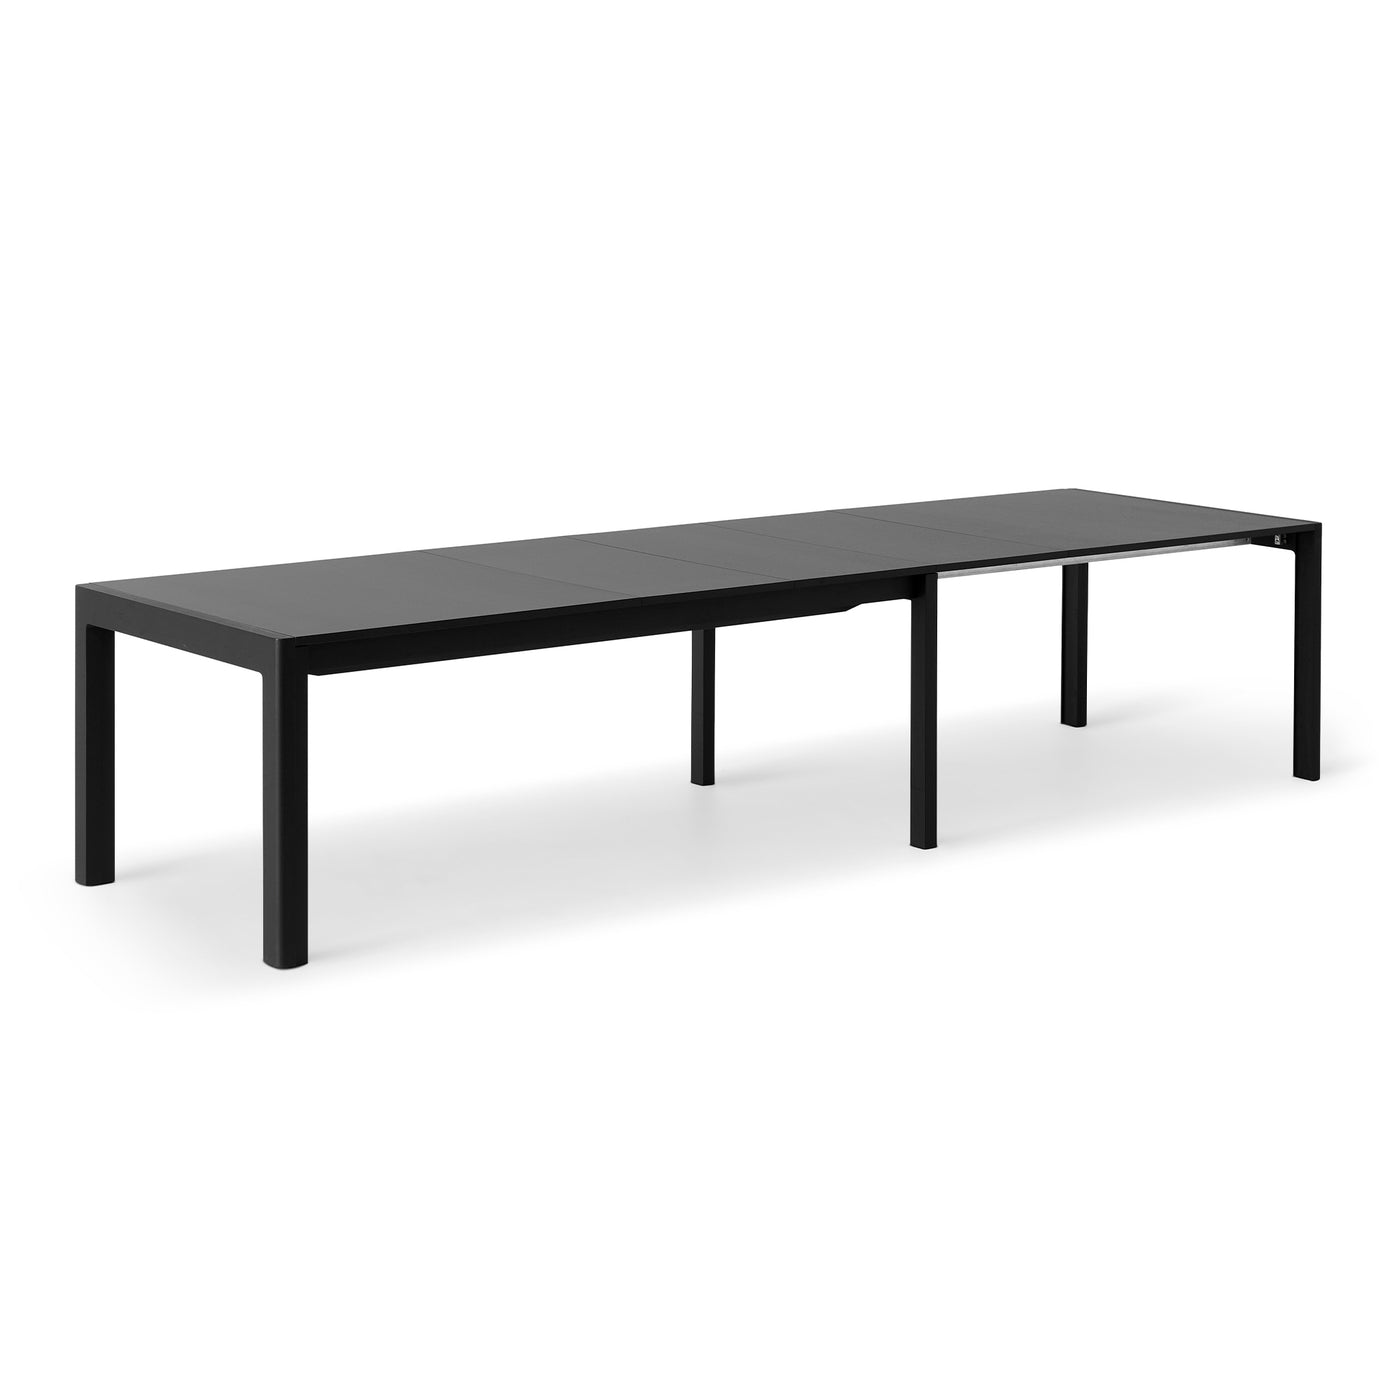 Join spisebord i 220 cm i sortbejdset eg fra Hammel